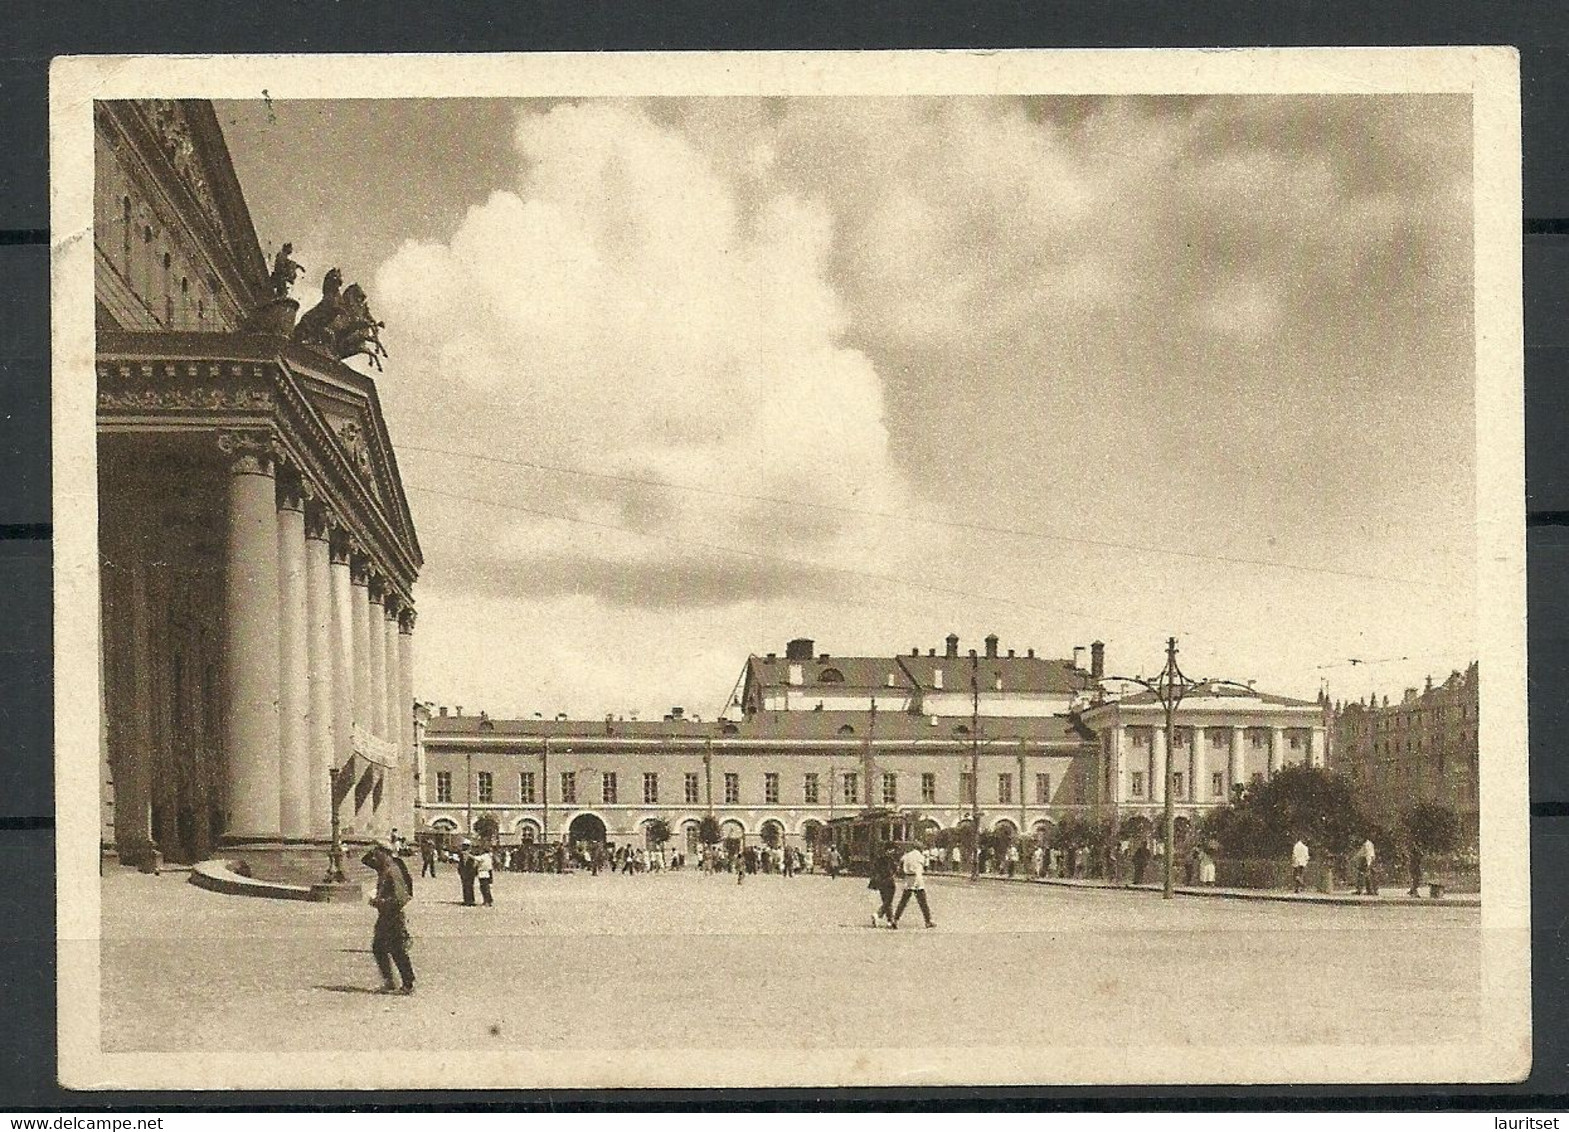 RUSSLAND RUSSIA 1931 Post Card Moscou To Germany Berlin Michel 396 As Single - Briefe U. Dokumente